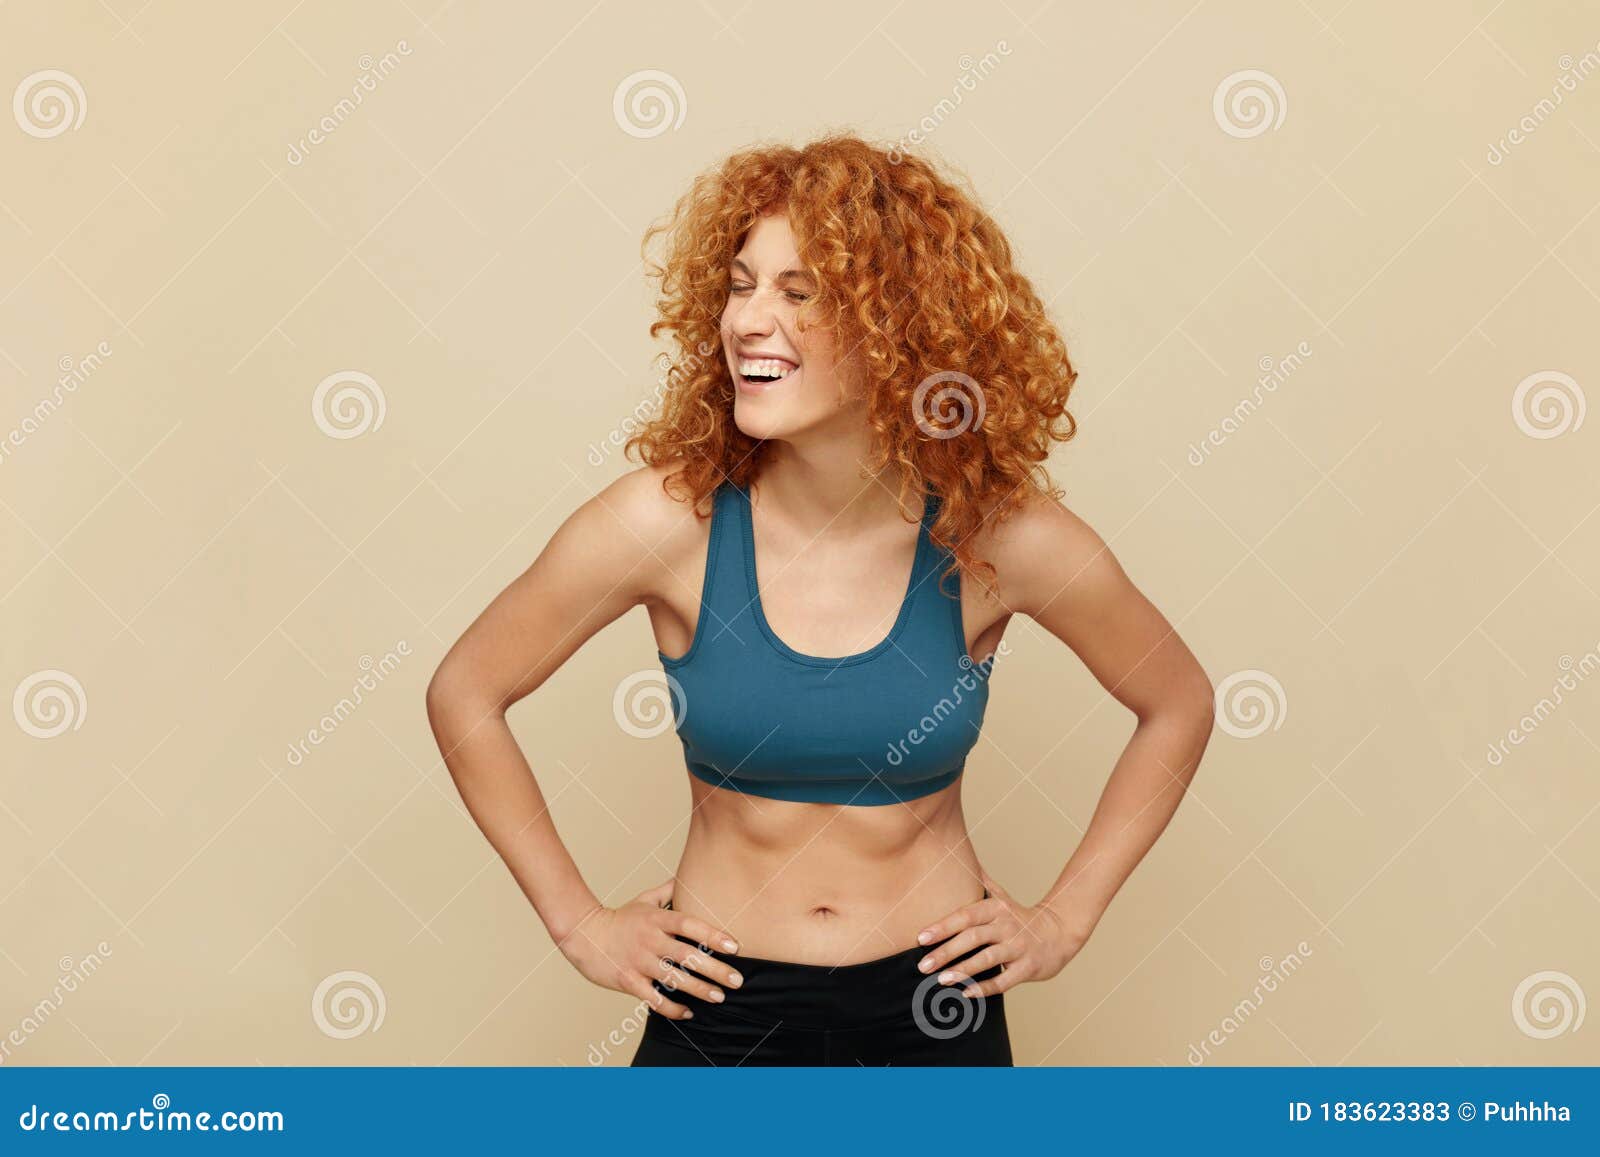 redhead woman. fit girl portrait. smiling beautiful female in sportswear keeping hands on hips.